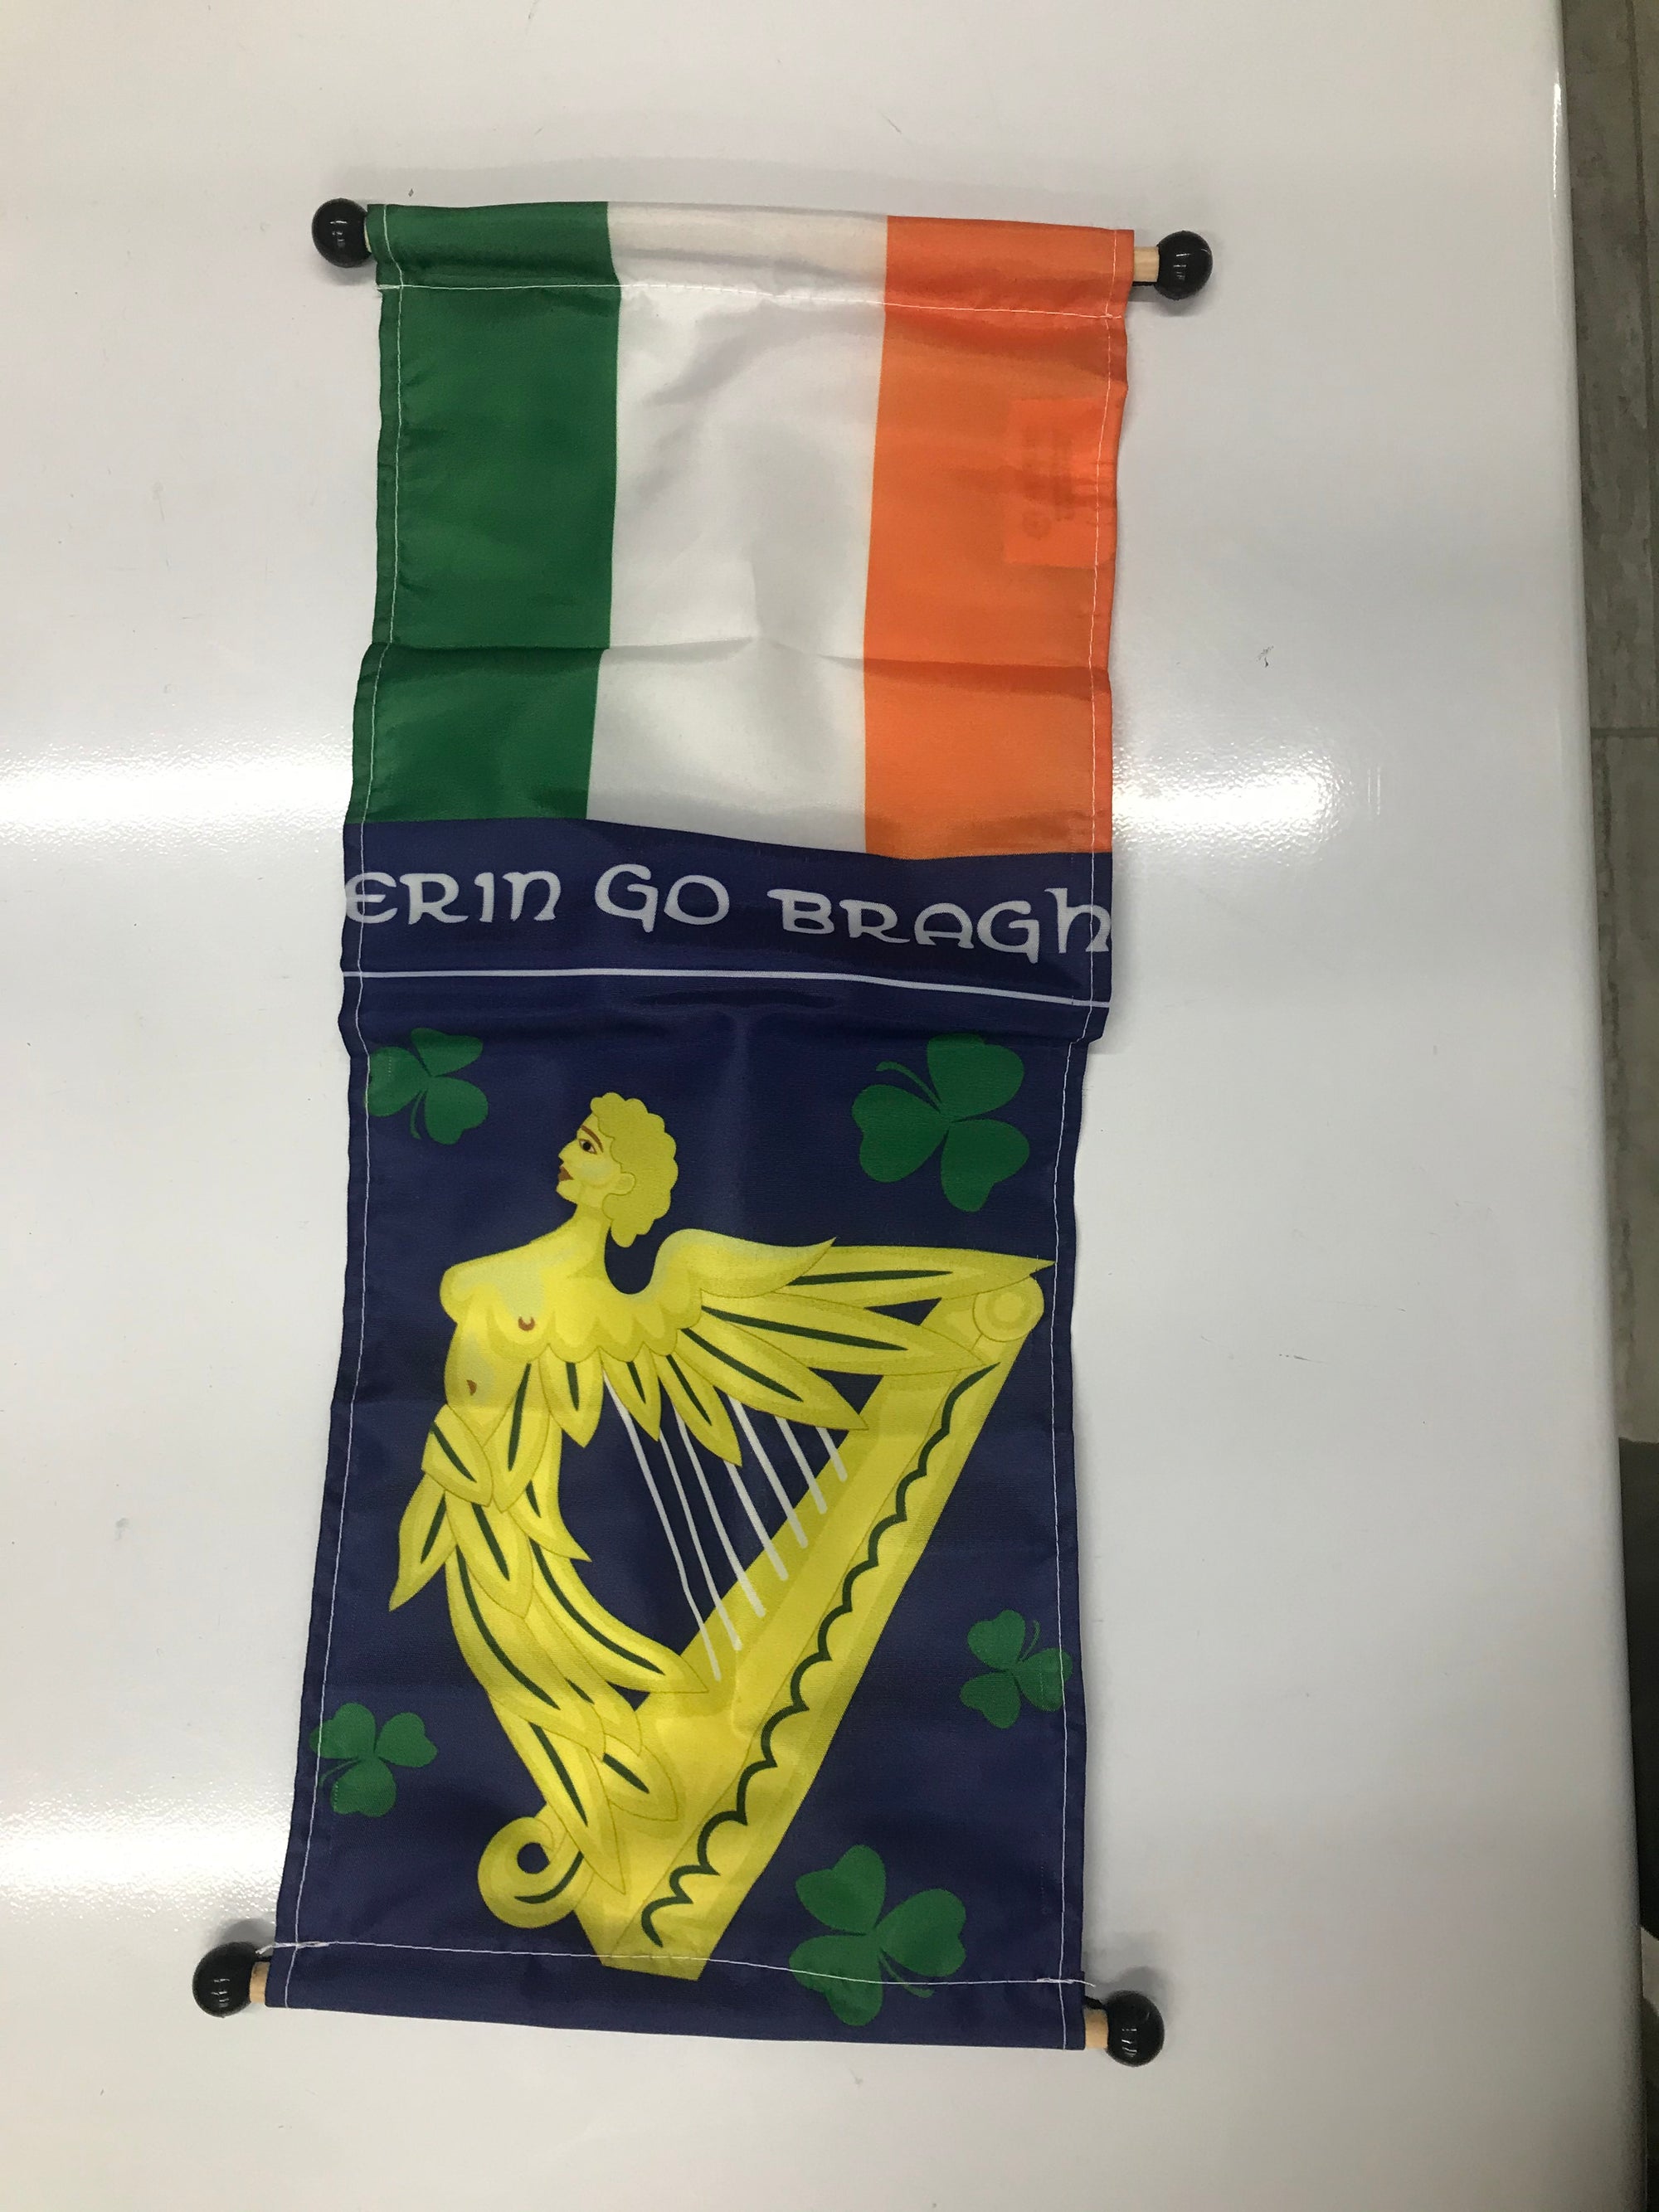 Ireland Small Banner